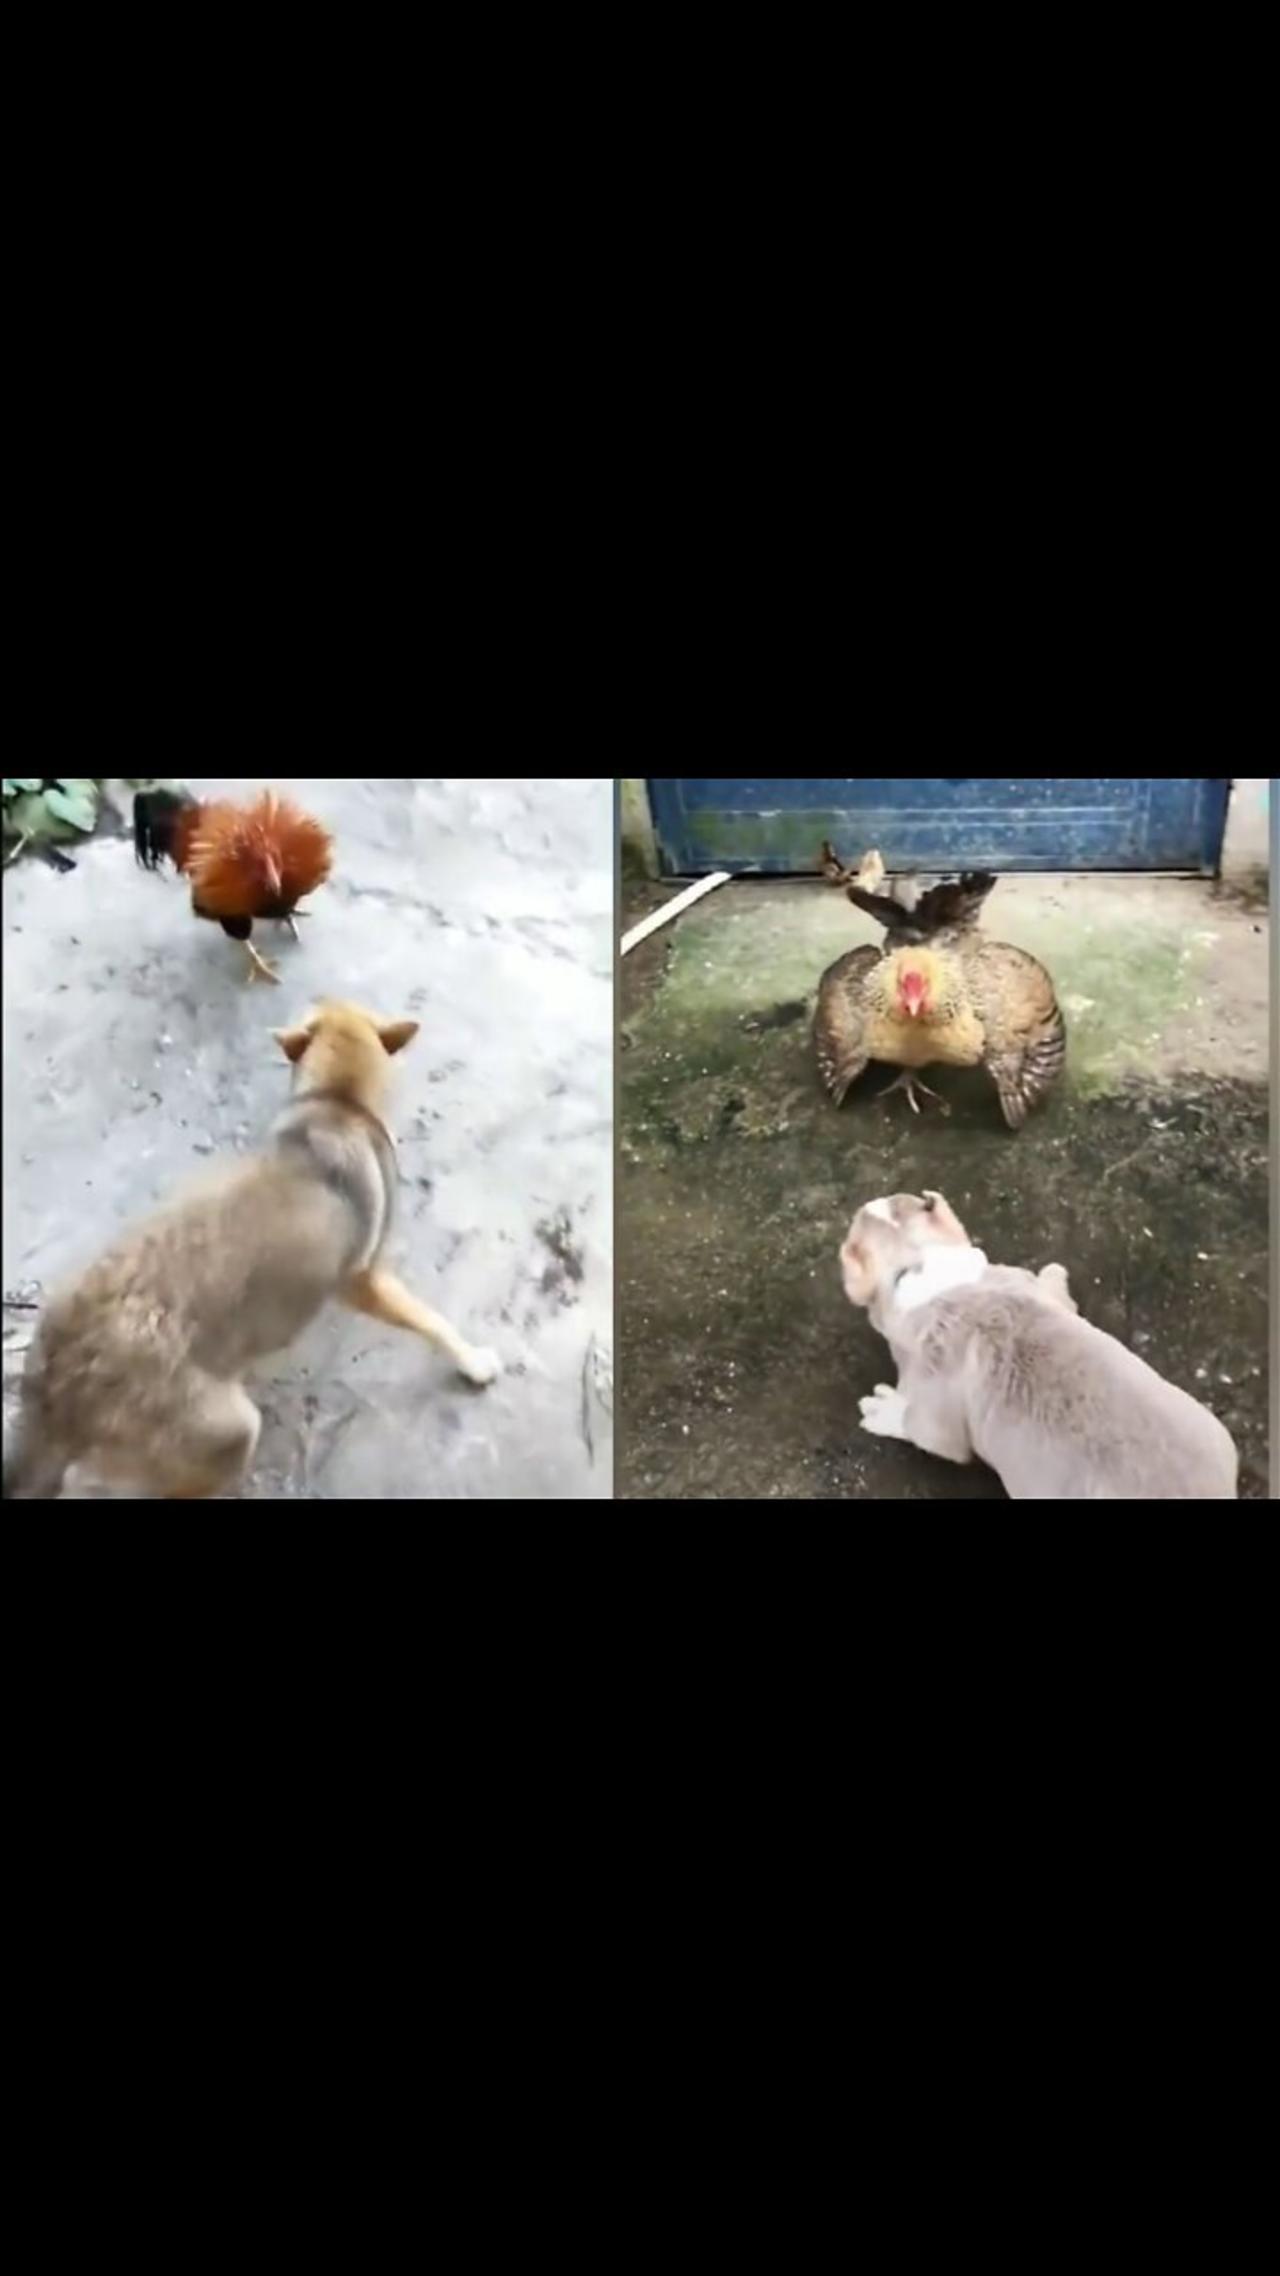 Chicken VS Dog Fight  -  Funny Dog Fight Videos